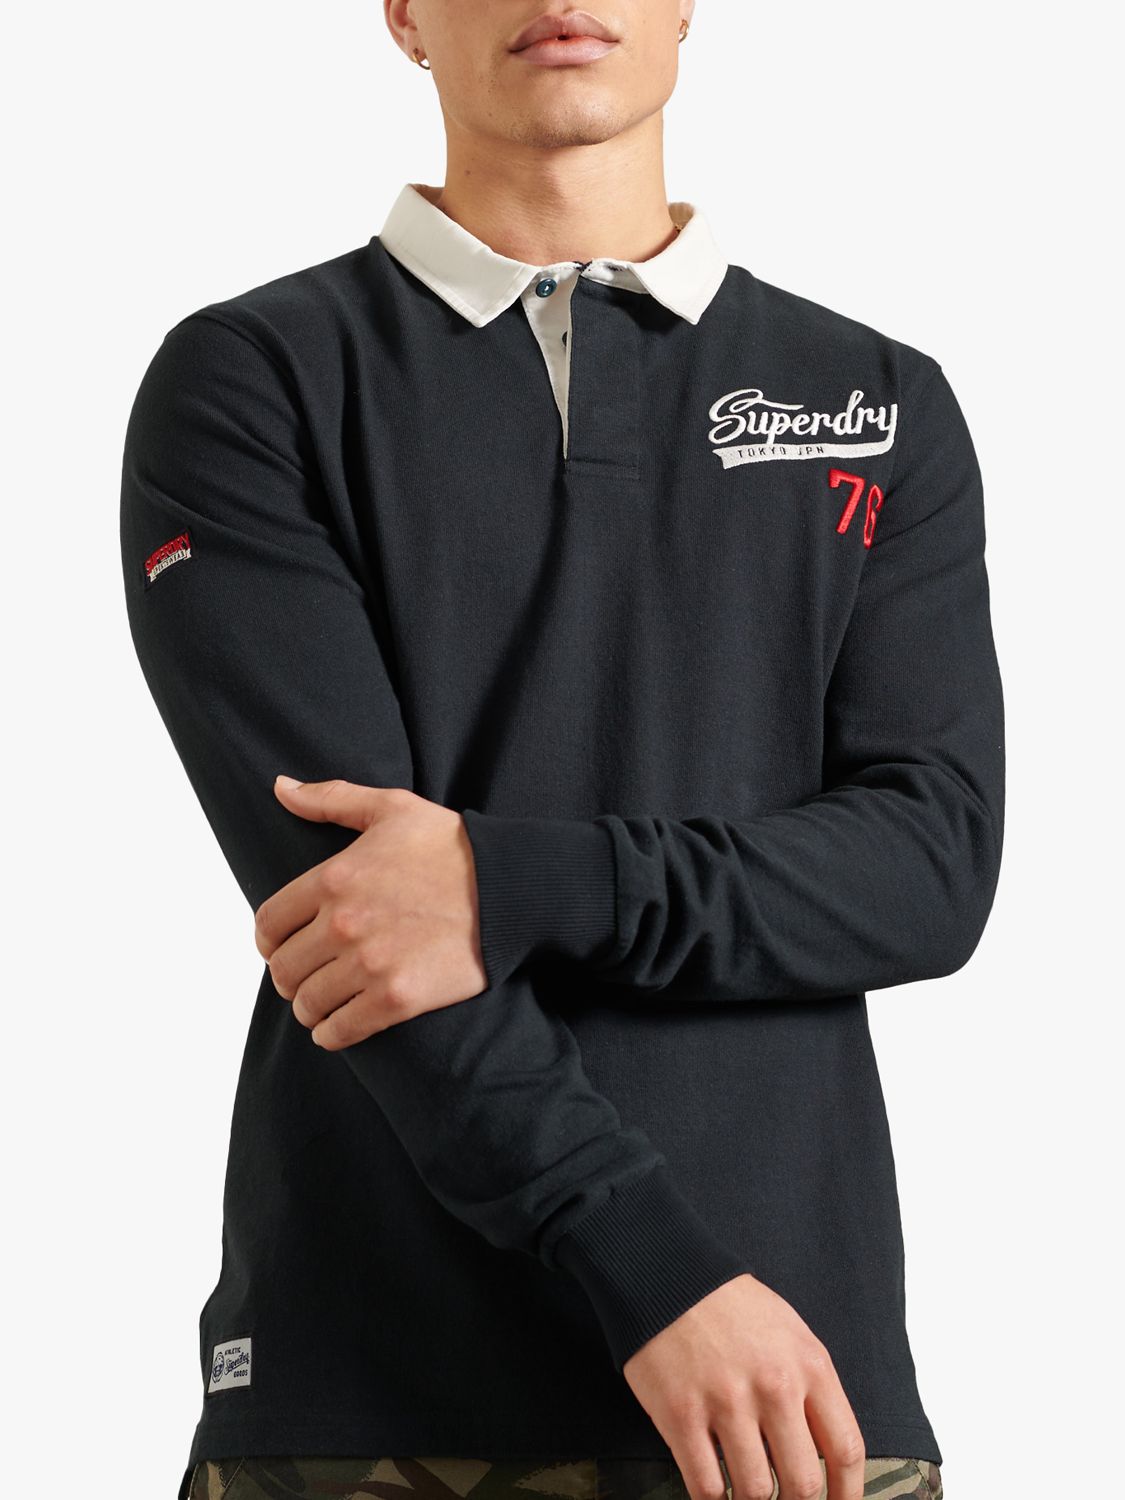 Melbourne Bruin Niet verwacht Superdry Long Sleeve Jersey Rugby Shirt, Eclipse Navy